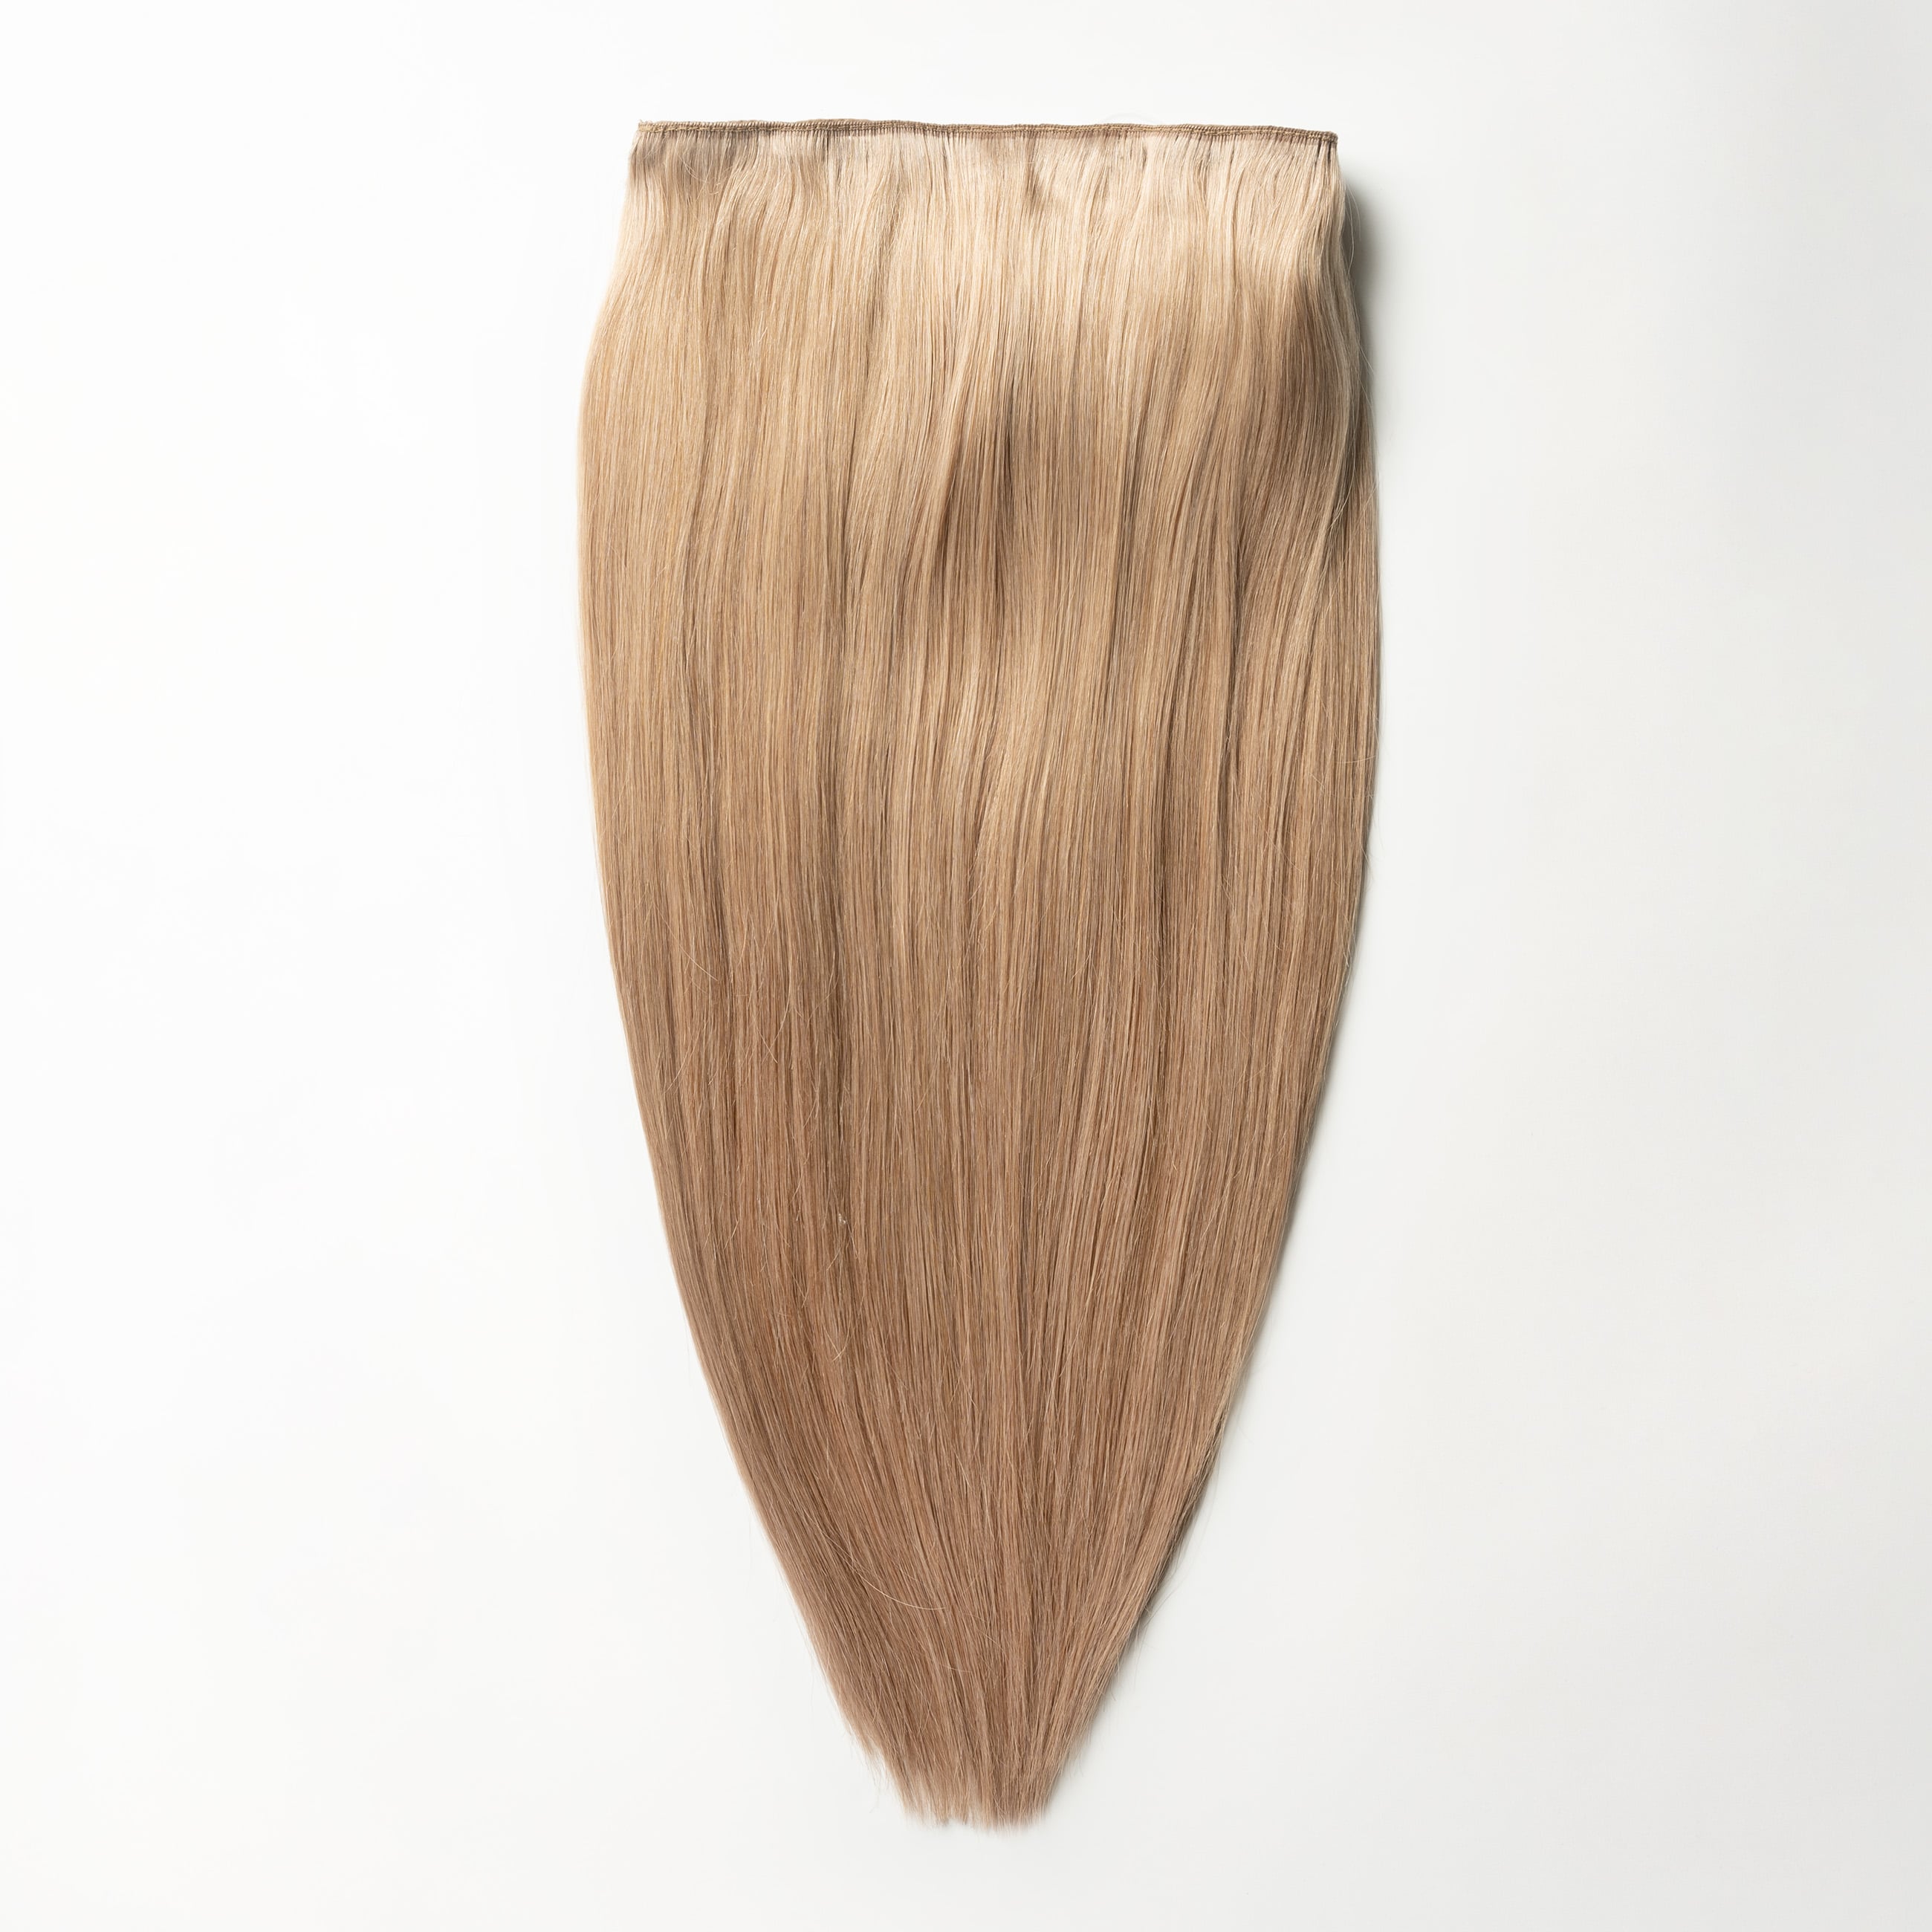 Halo hair extensions - Lys askbrun nr. 12B